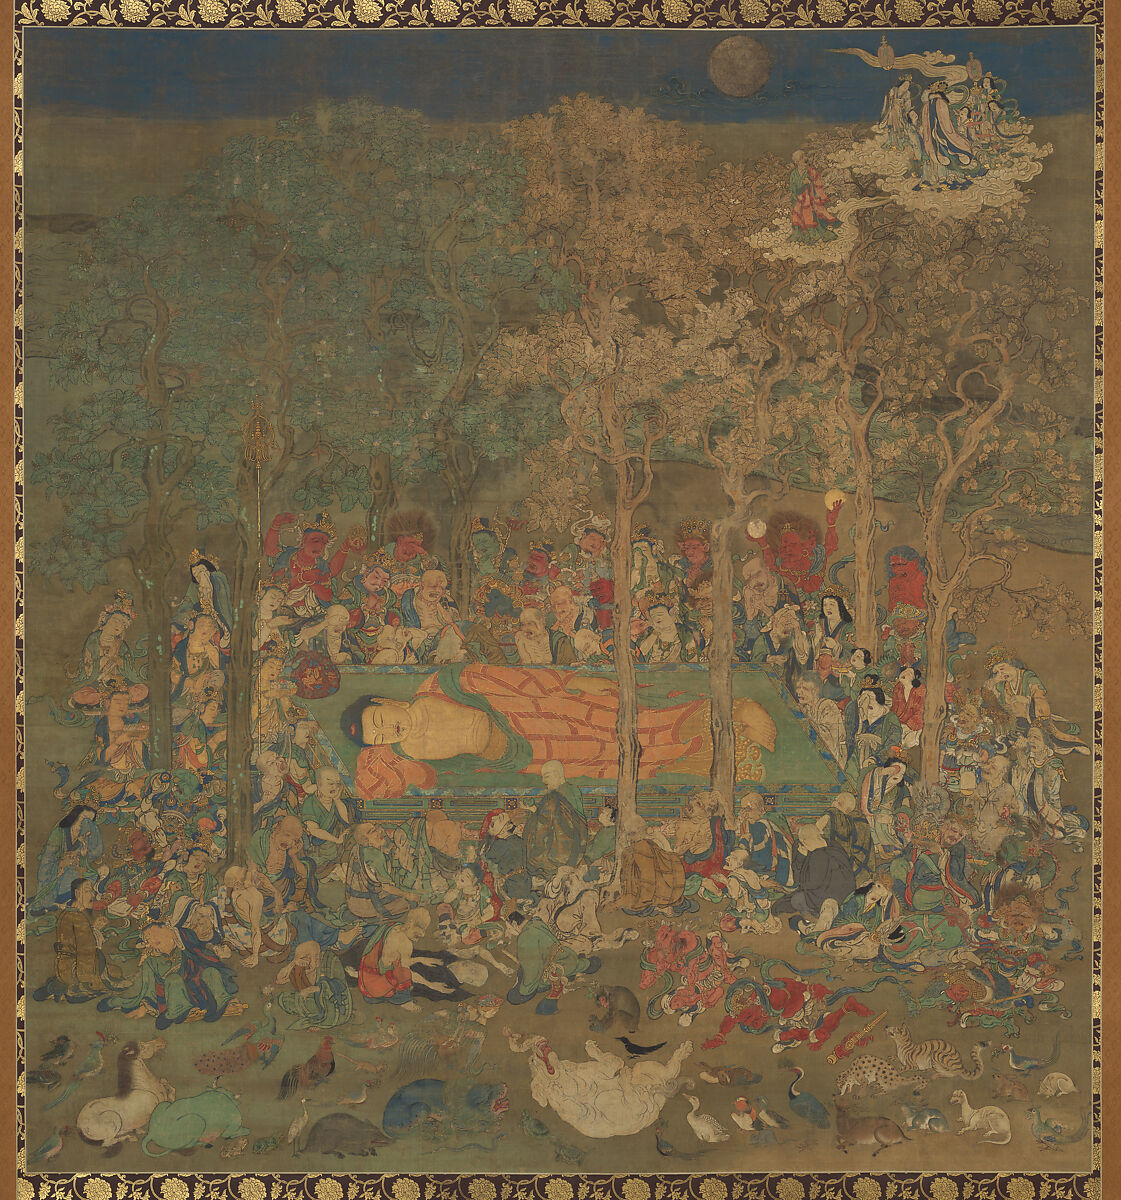 Death of the Historical Buddha (Nehan-zu)